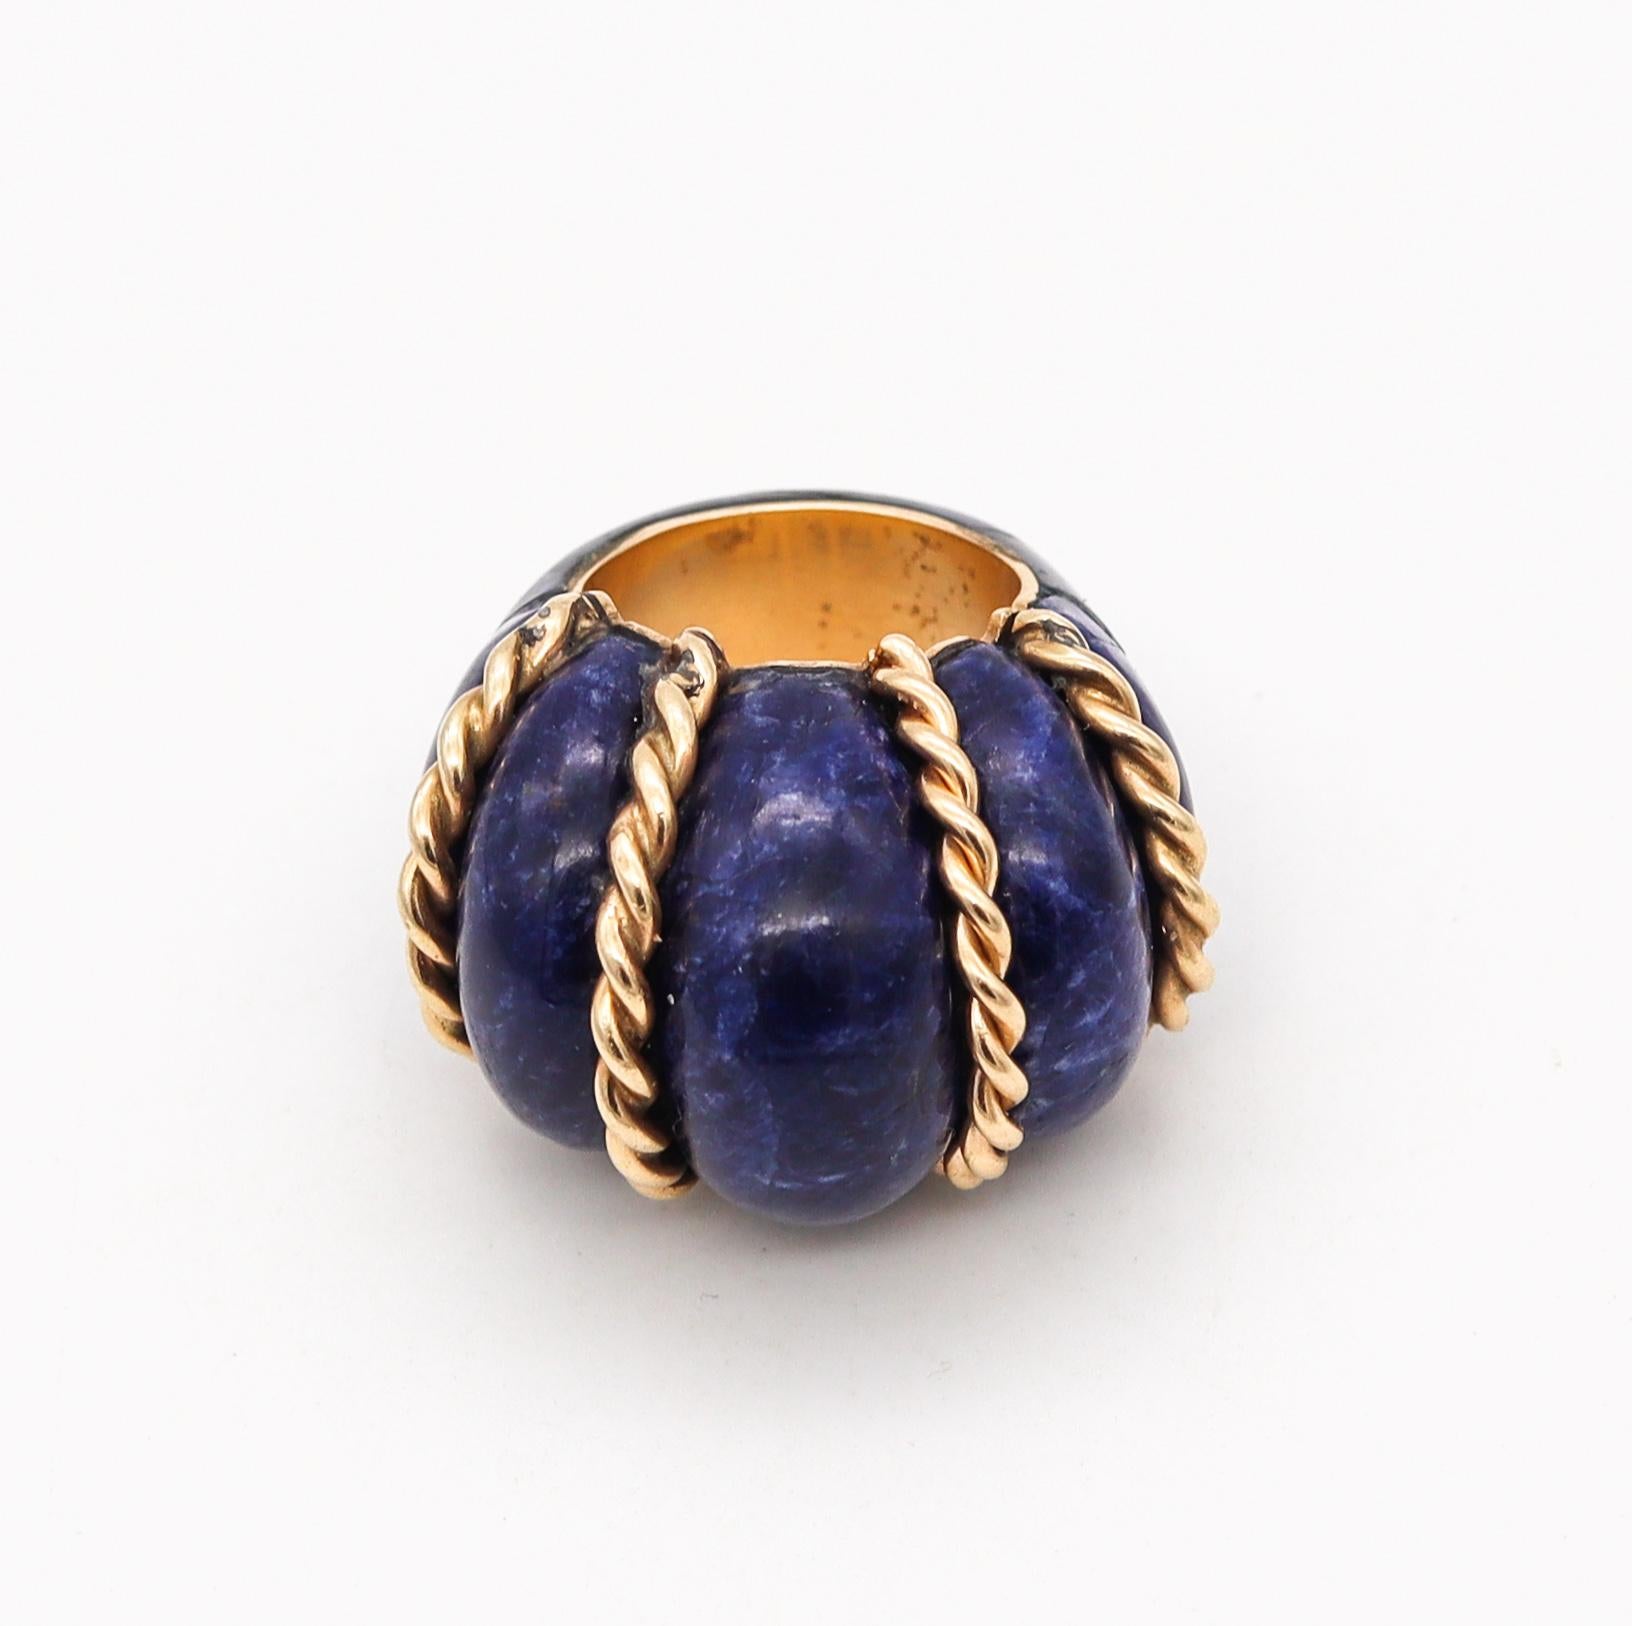 Women's Seaman Schepps 1960 Shrimp Cocktail Ring in 18 Kt Gold with Fluted Lapis Lazuli